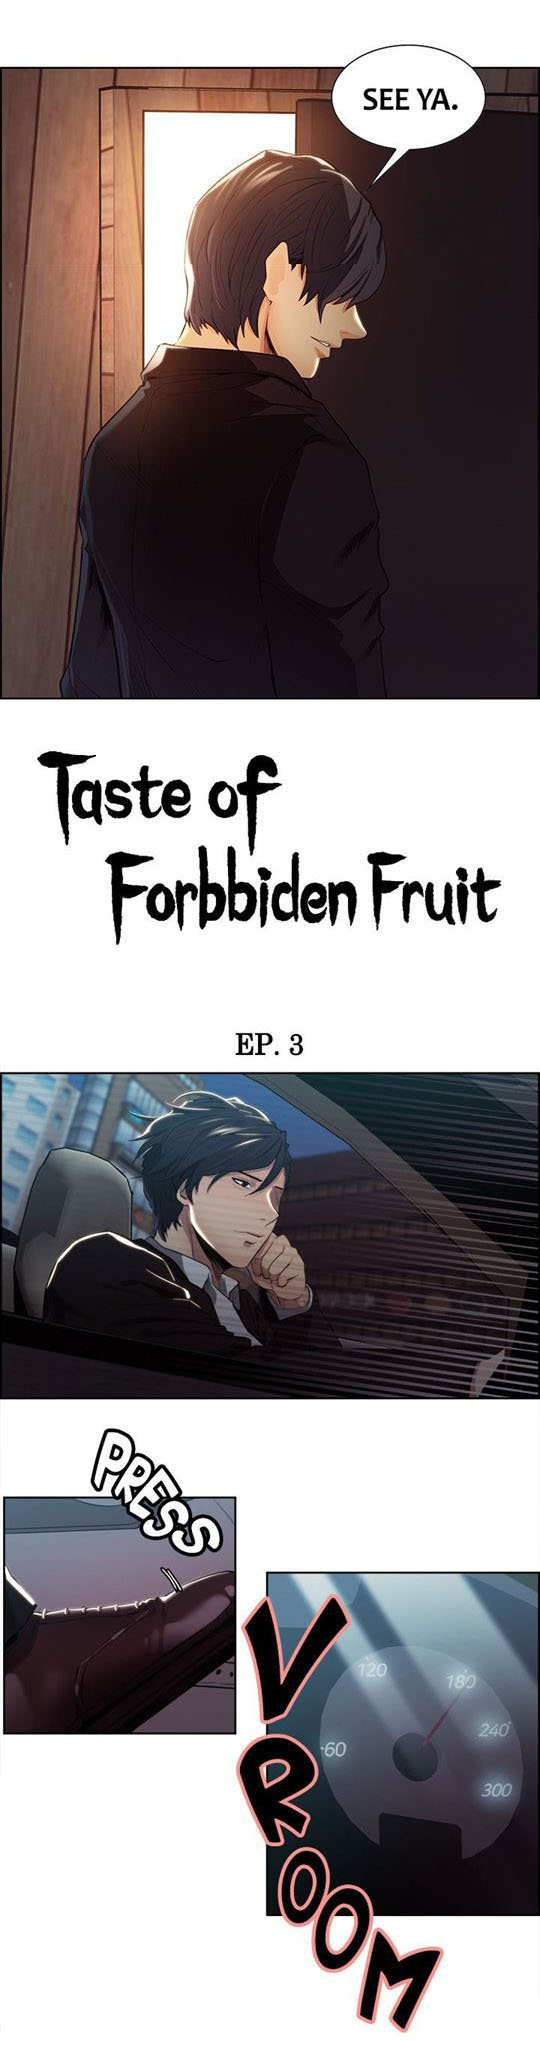 [Serious] Taste of Forbbiden Fruit Ch.5/24